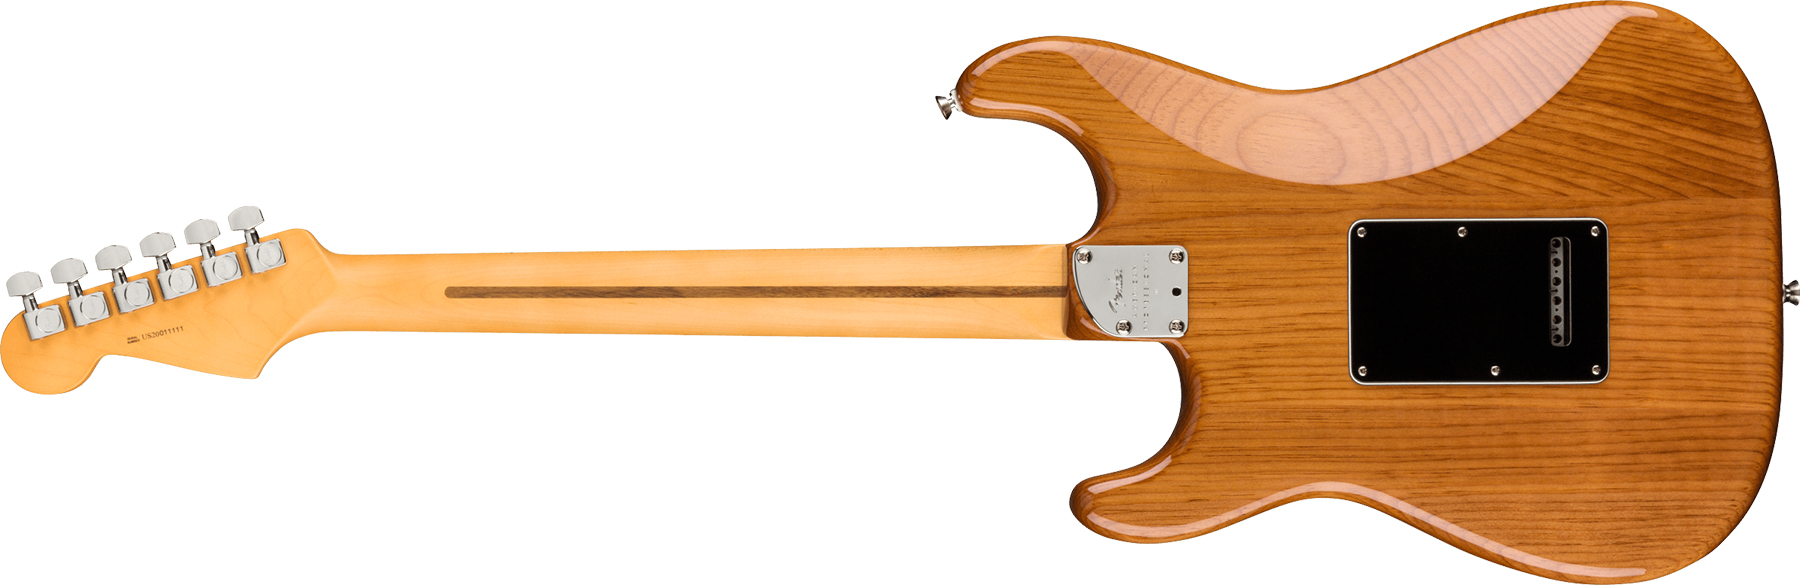 Fender Strat American Professional Ii Usa Mn - Roasted Pine - E-Gitarre in Str-Form - Variation 1